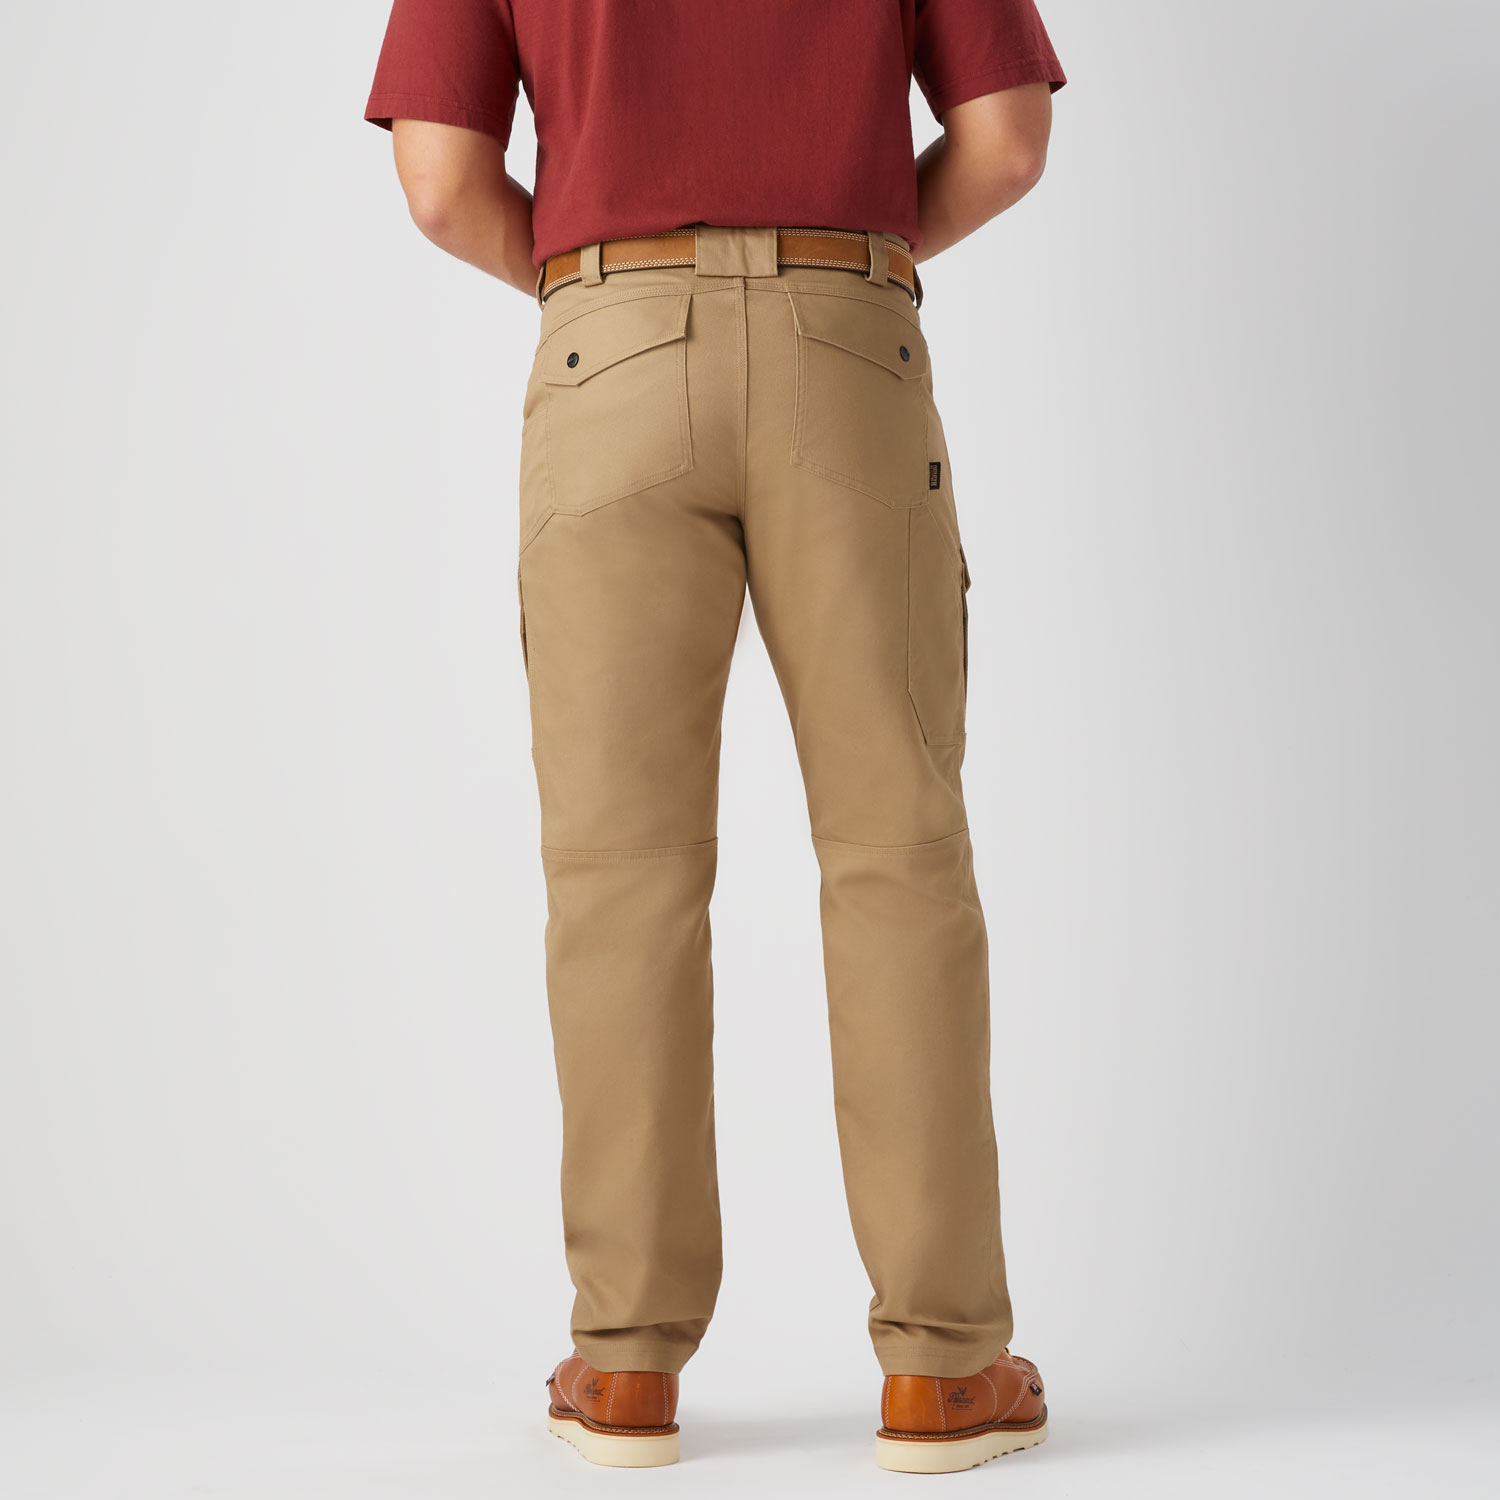 Men's DuluthFlex Fire Hose HD Standard Fit Cargo Pants